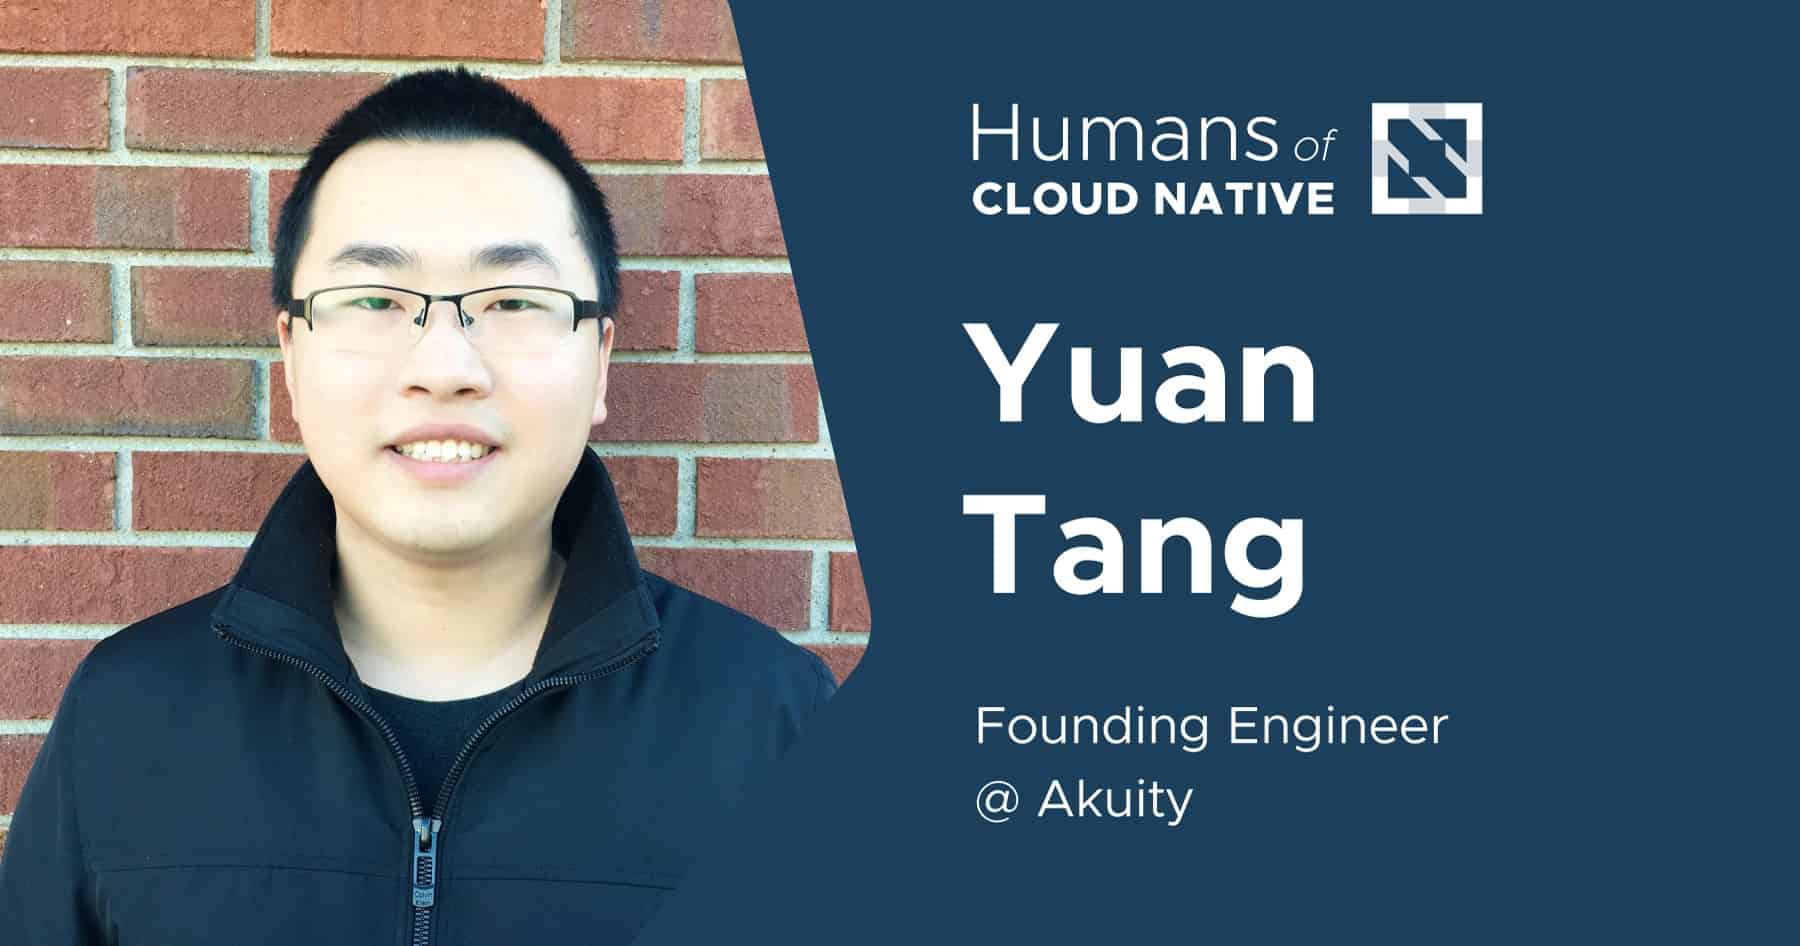 Humans of cloud native banner showing Yuan Tang